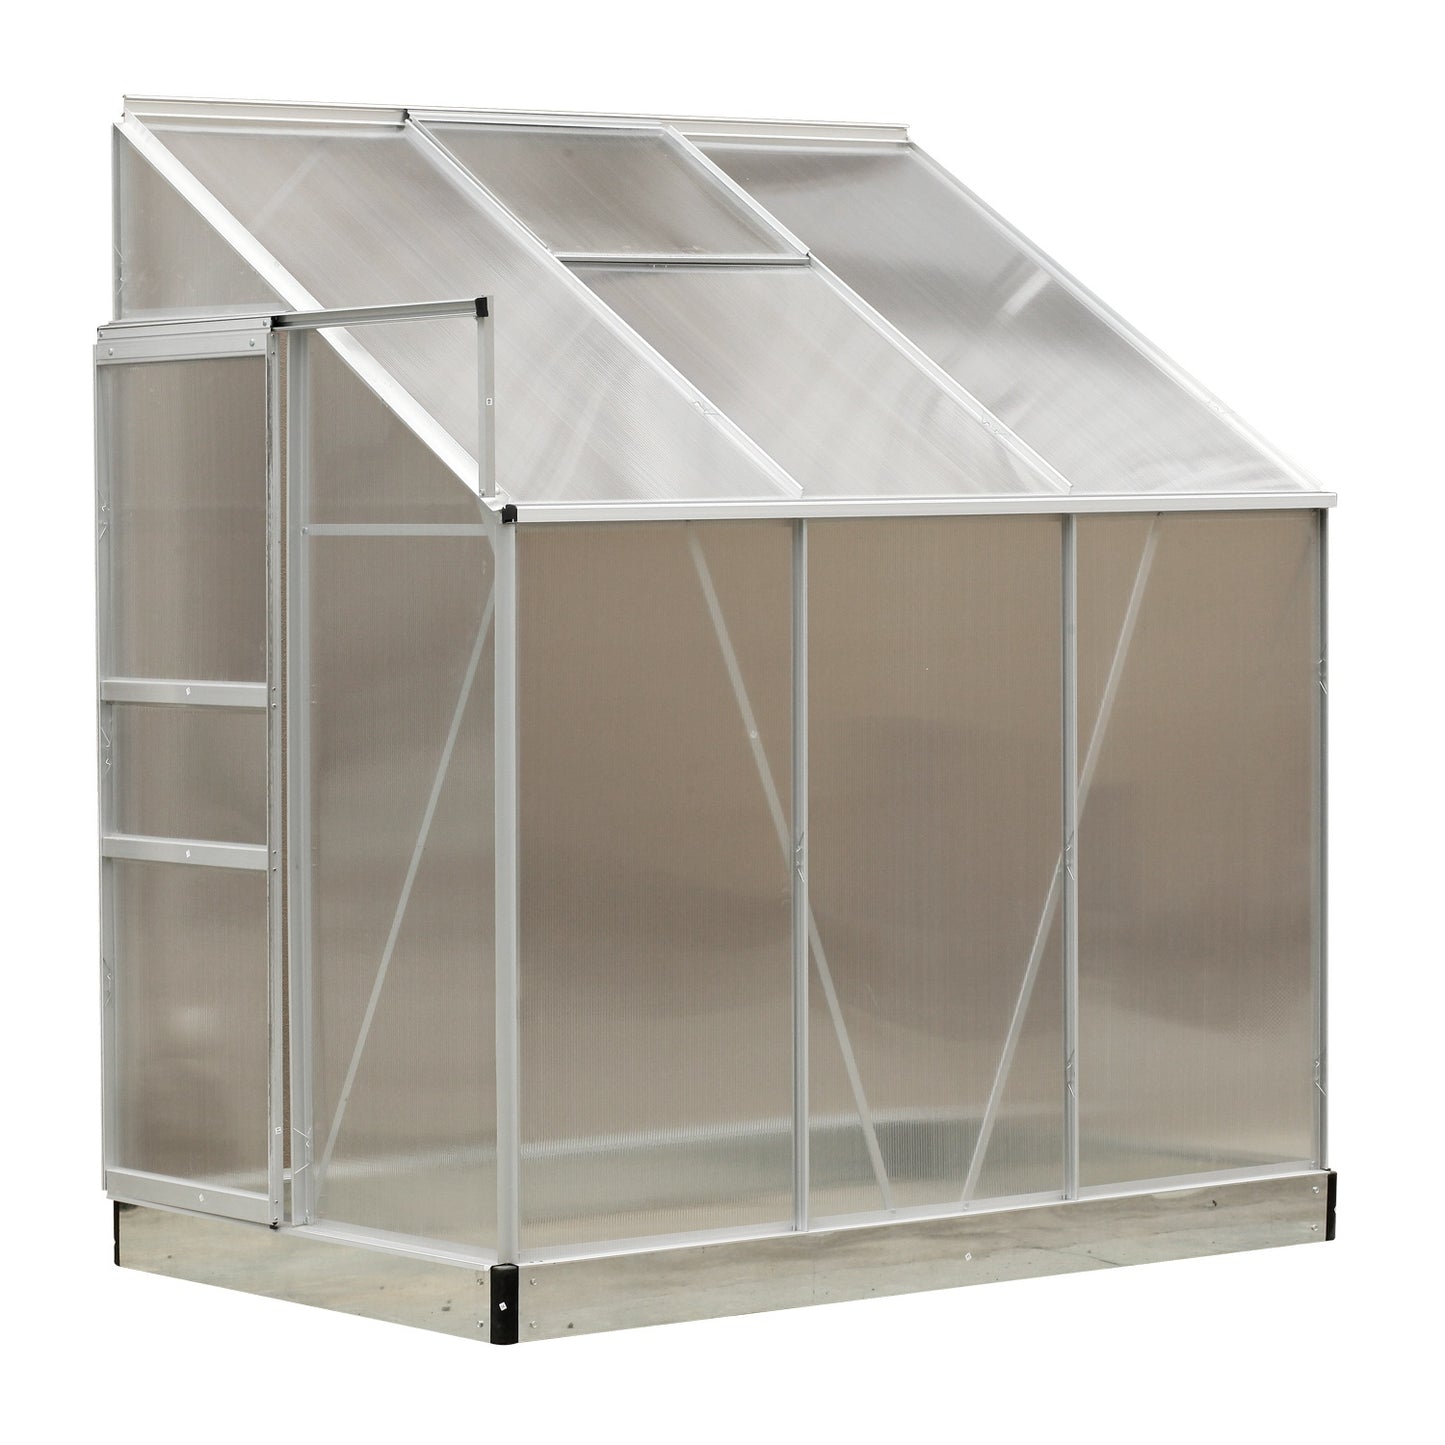 Outsunny Aluminum Lean to Garden Sun Greenhouse Enclosure with Screen 190 x 131 x 215 cm